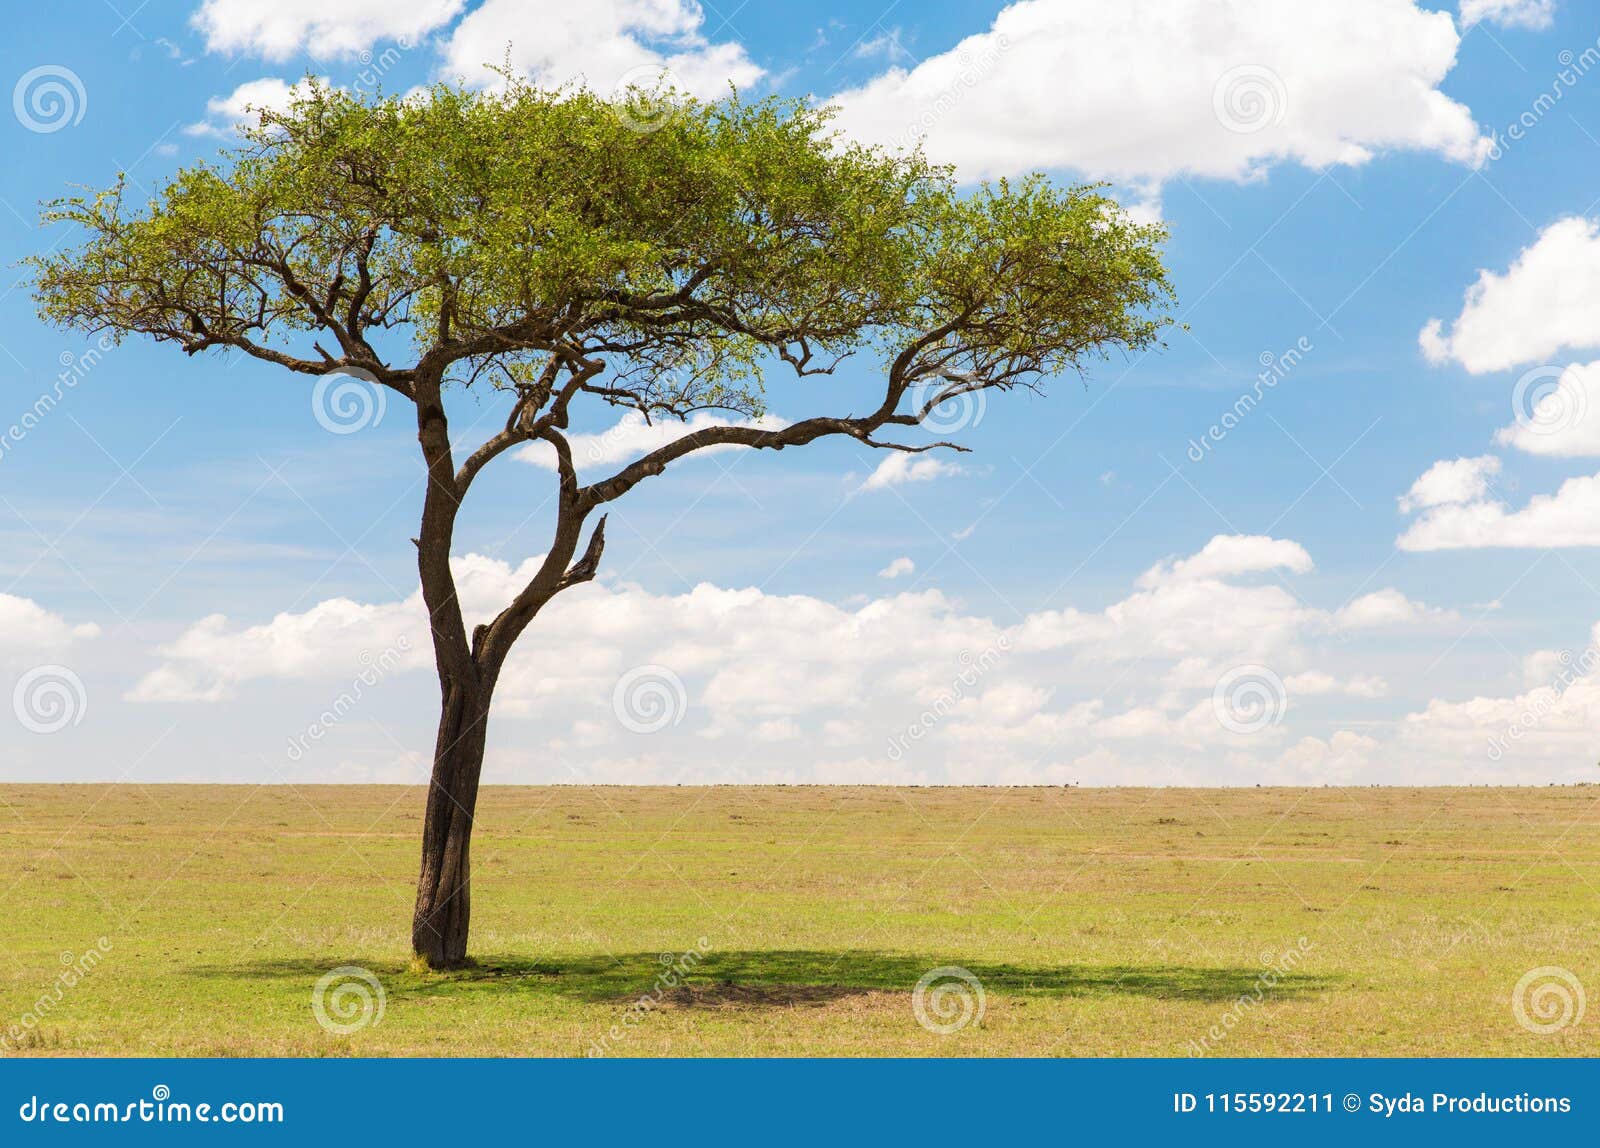 acacia tree in african savanna